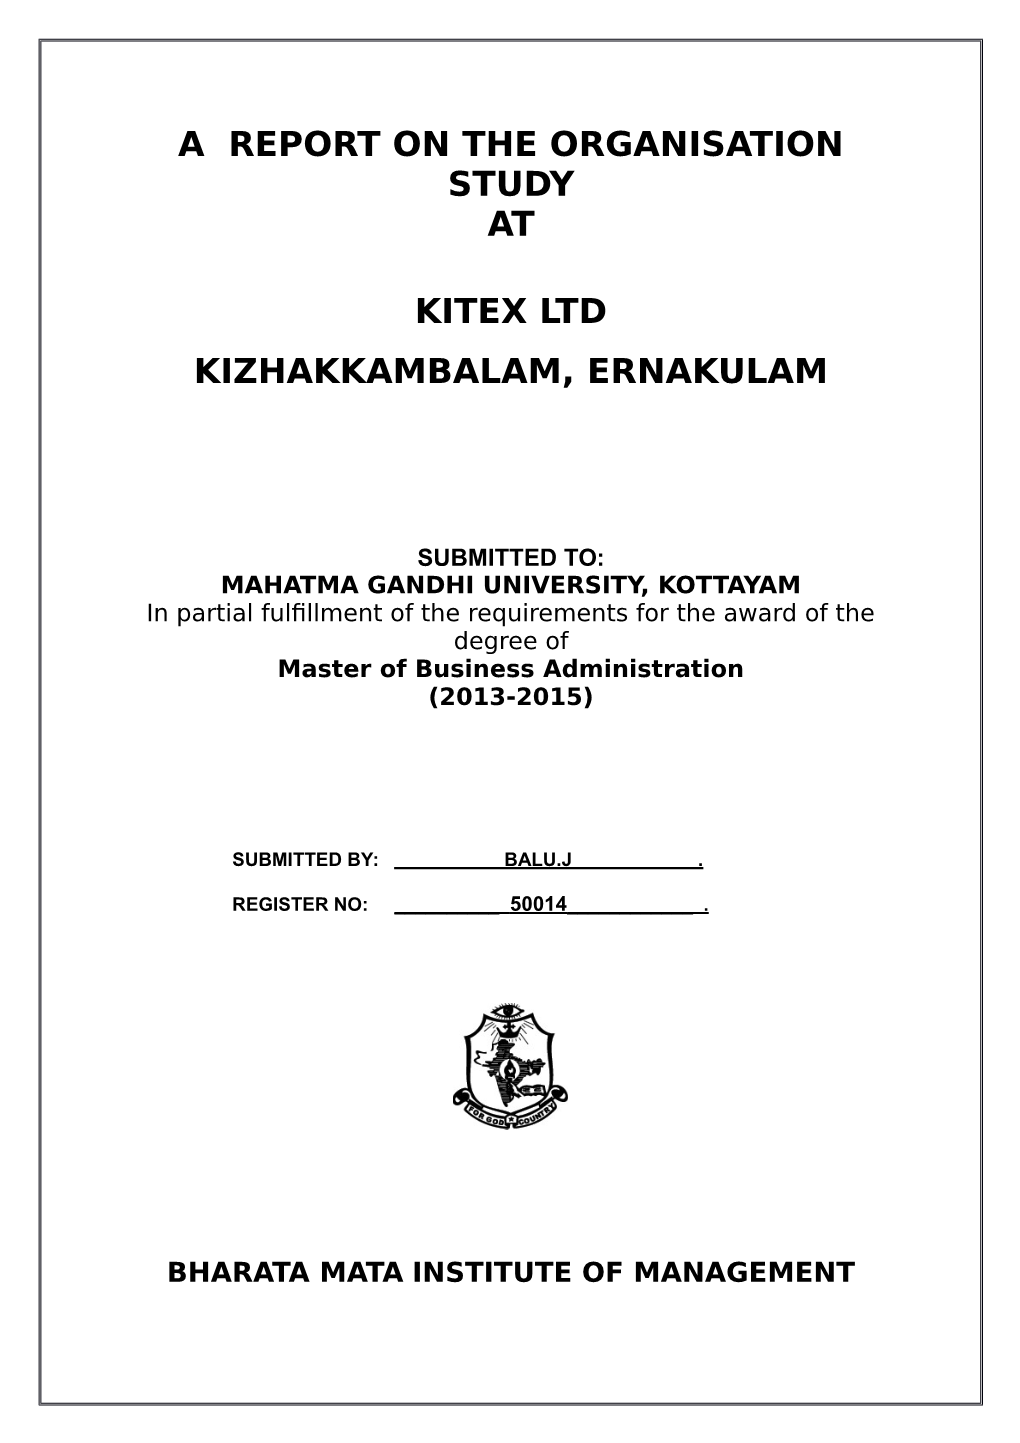 A Report on the Organisation Study at Kitex Ltd